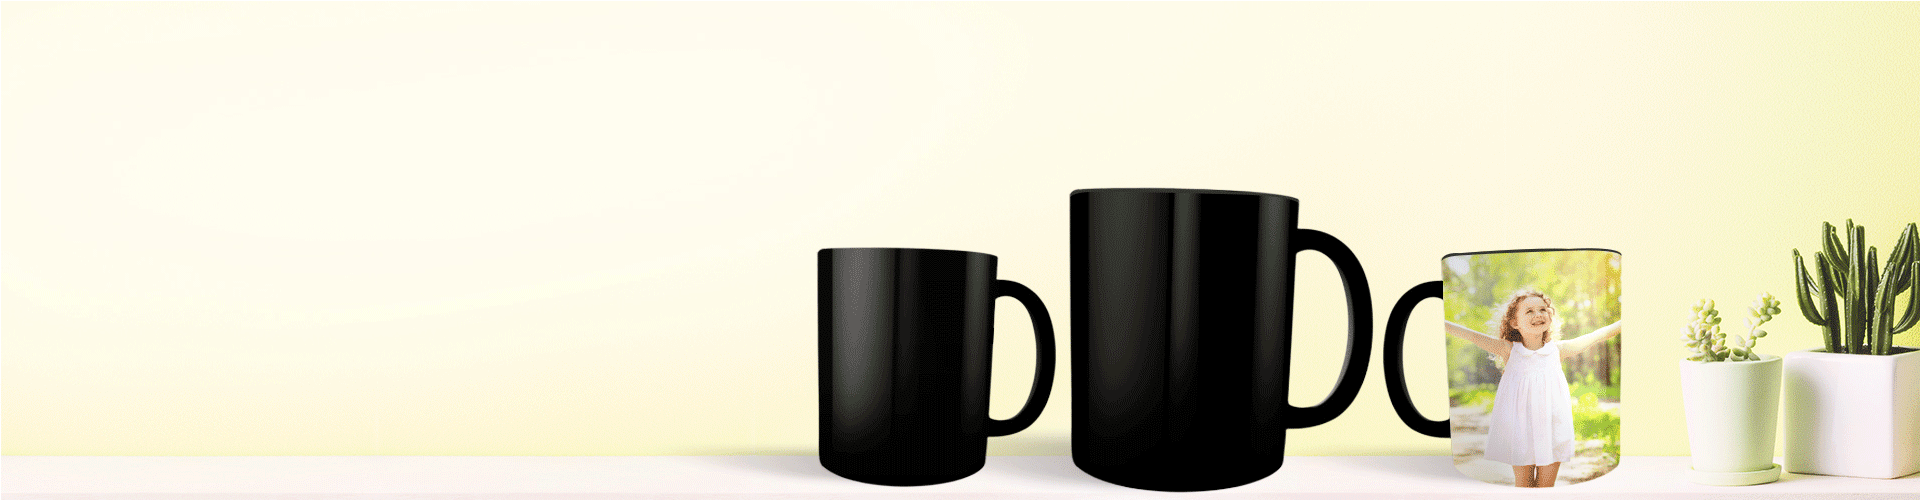 Magic Mugs - Create a Custom Magic Photo Mugs Online